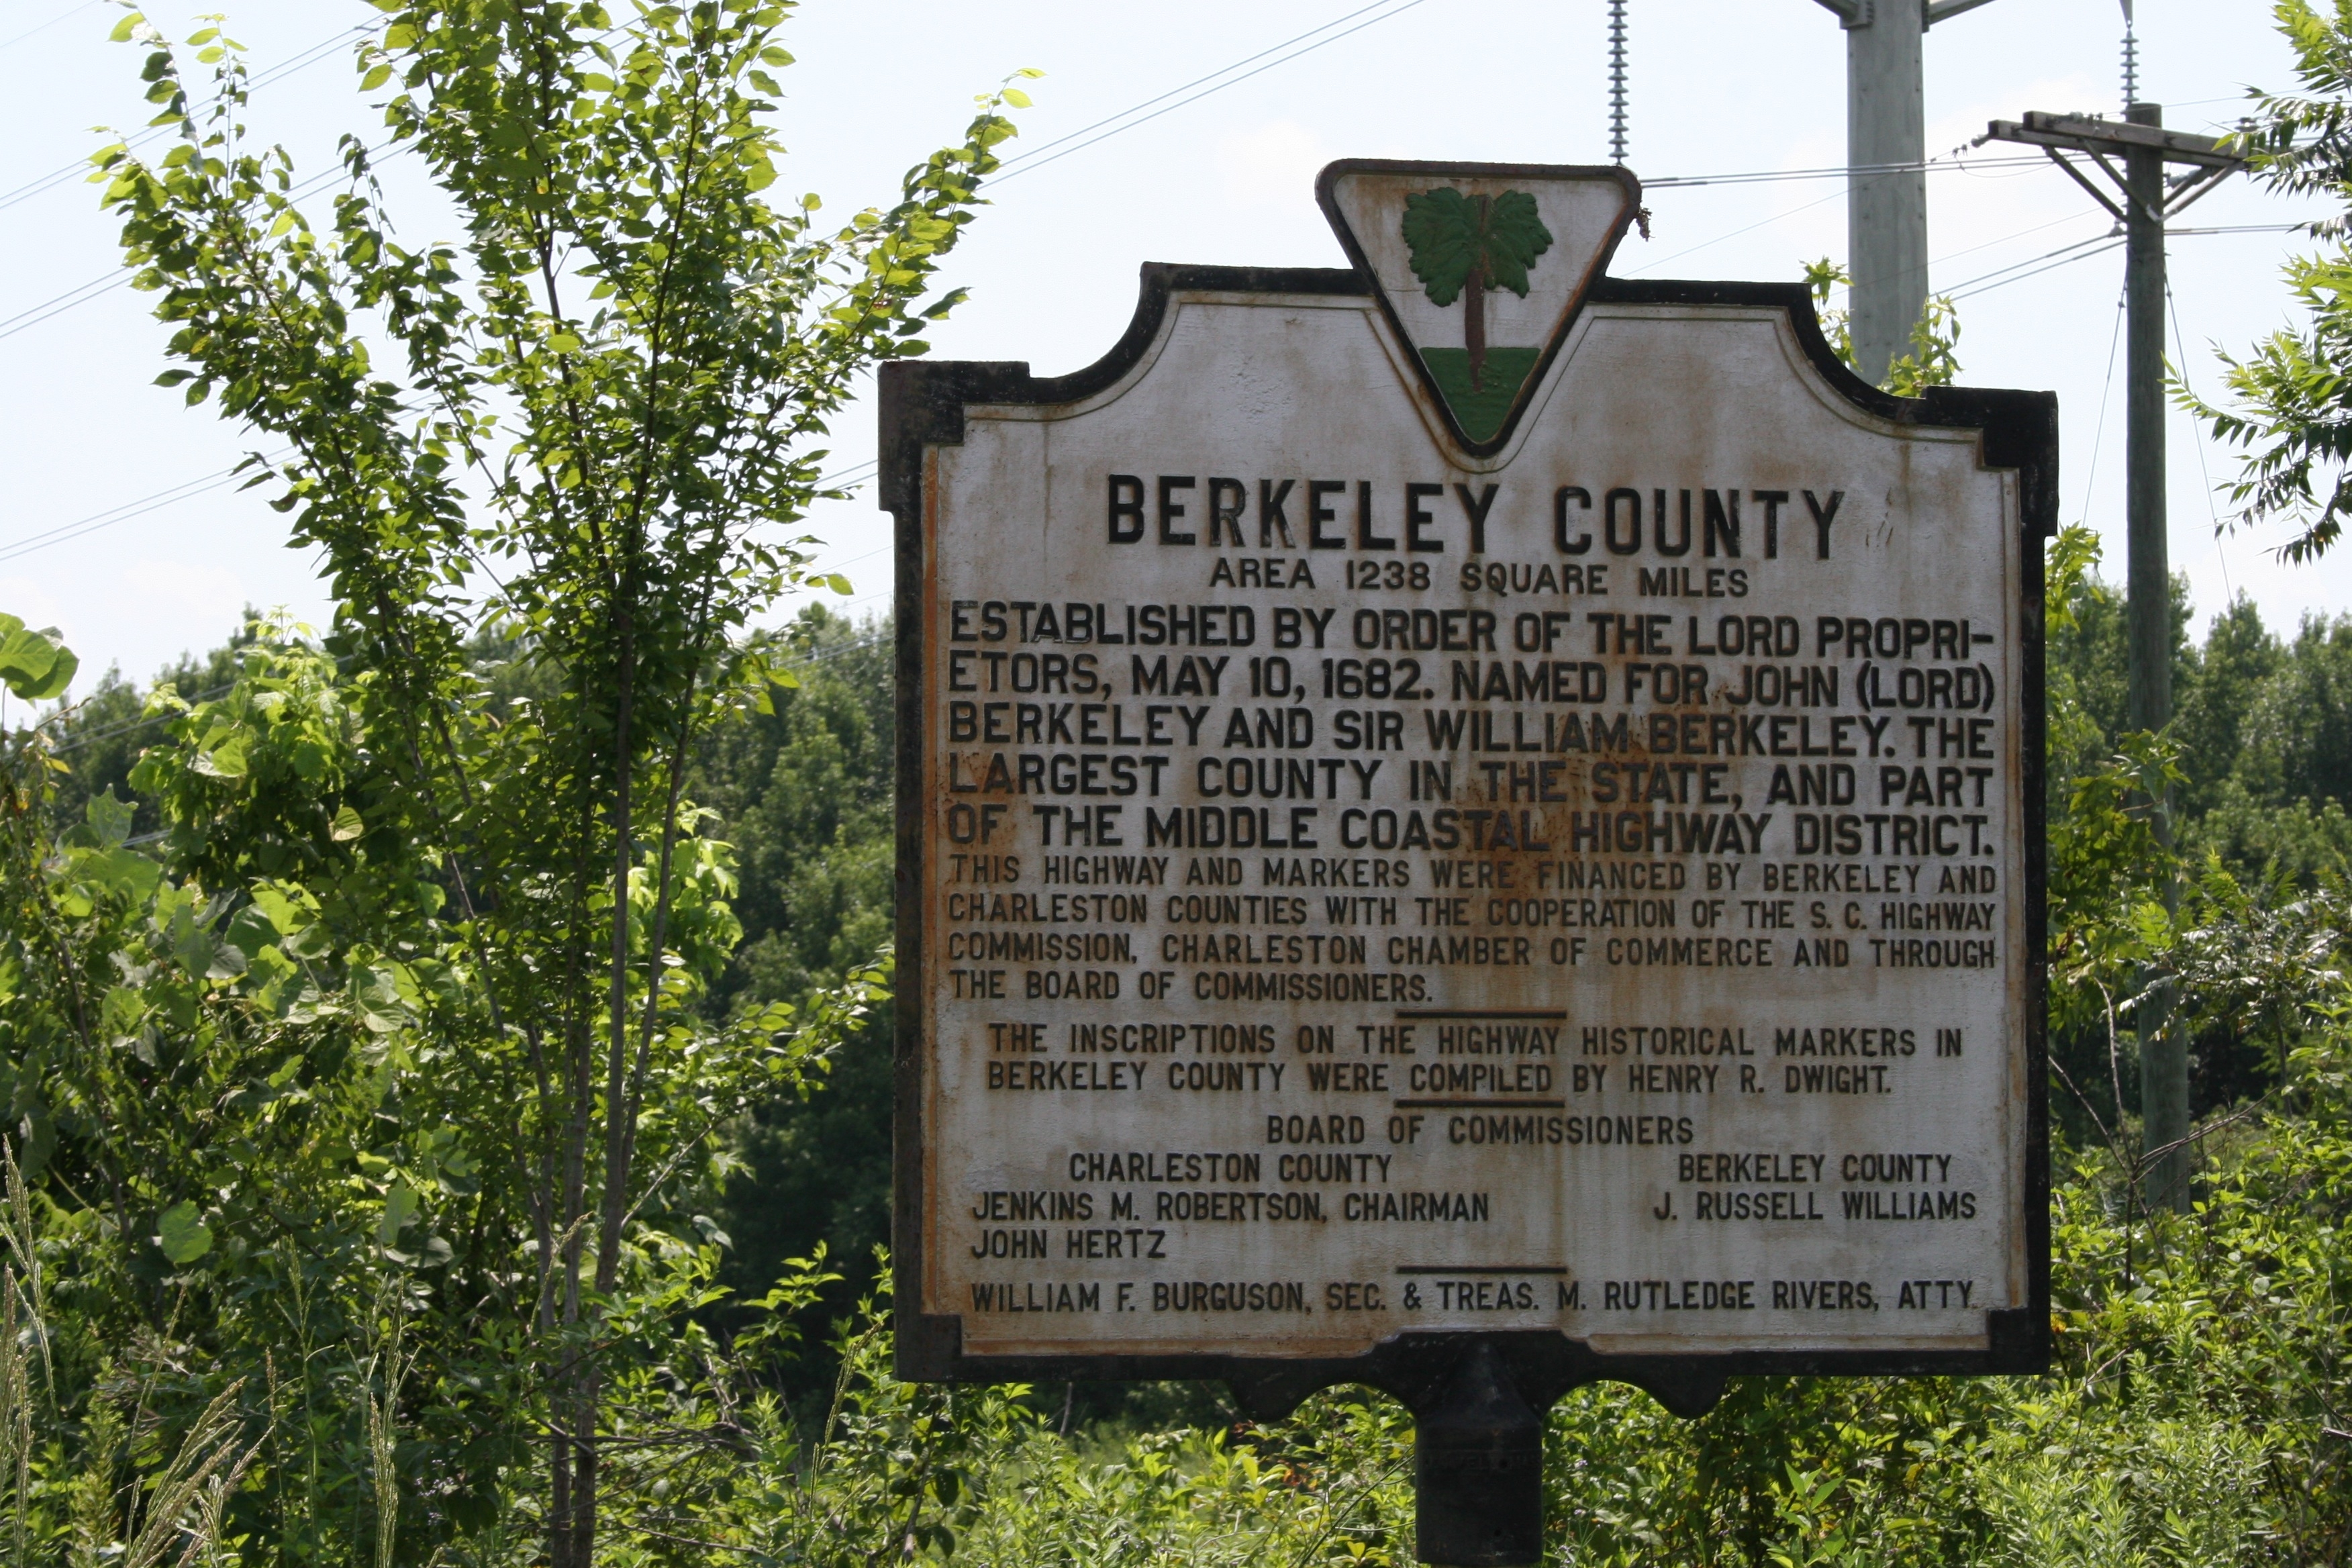 Berkeley County Marker (ca. 1940)